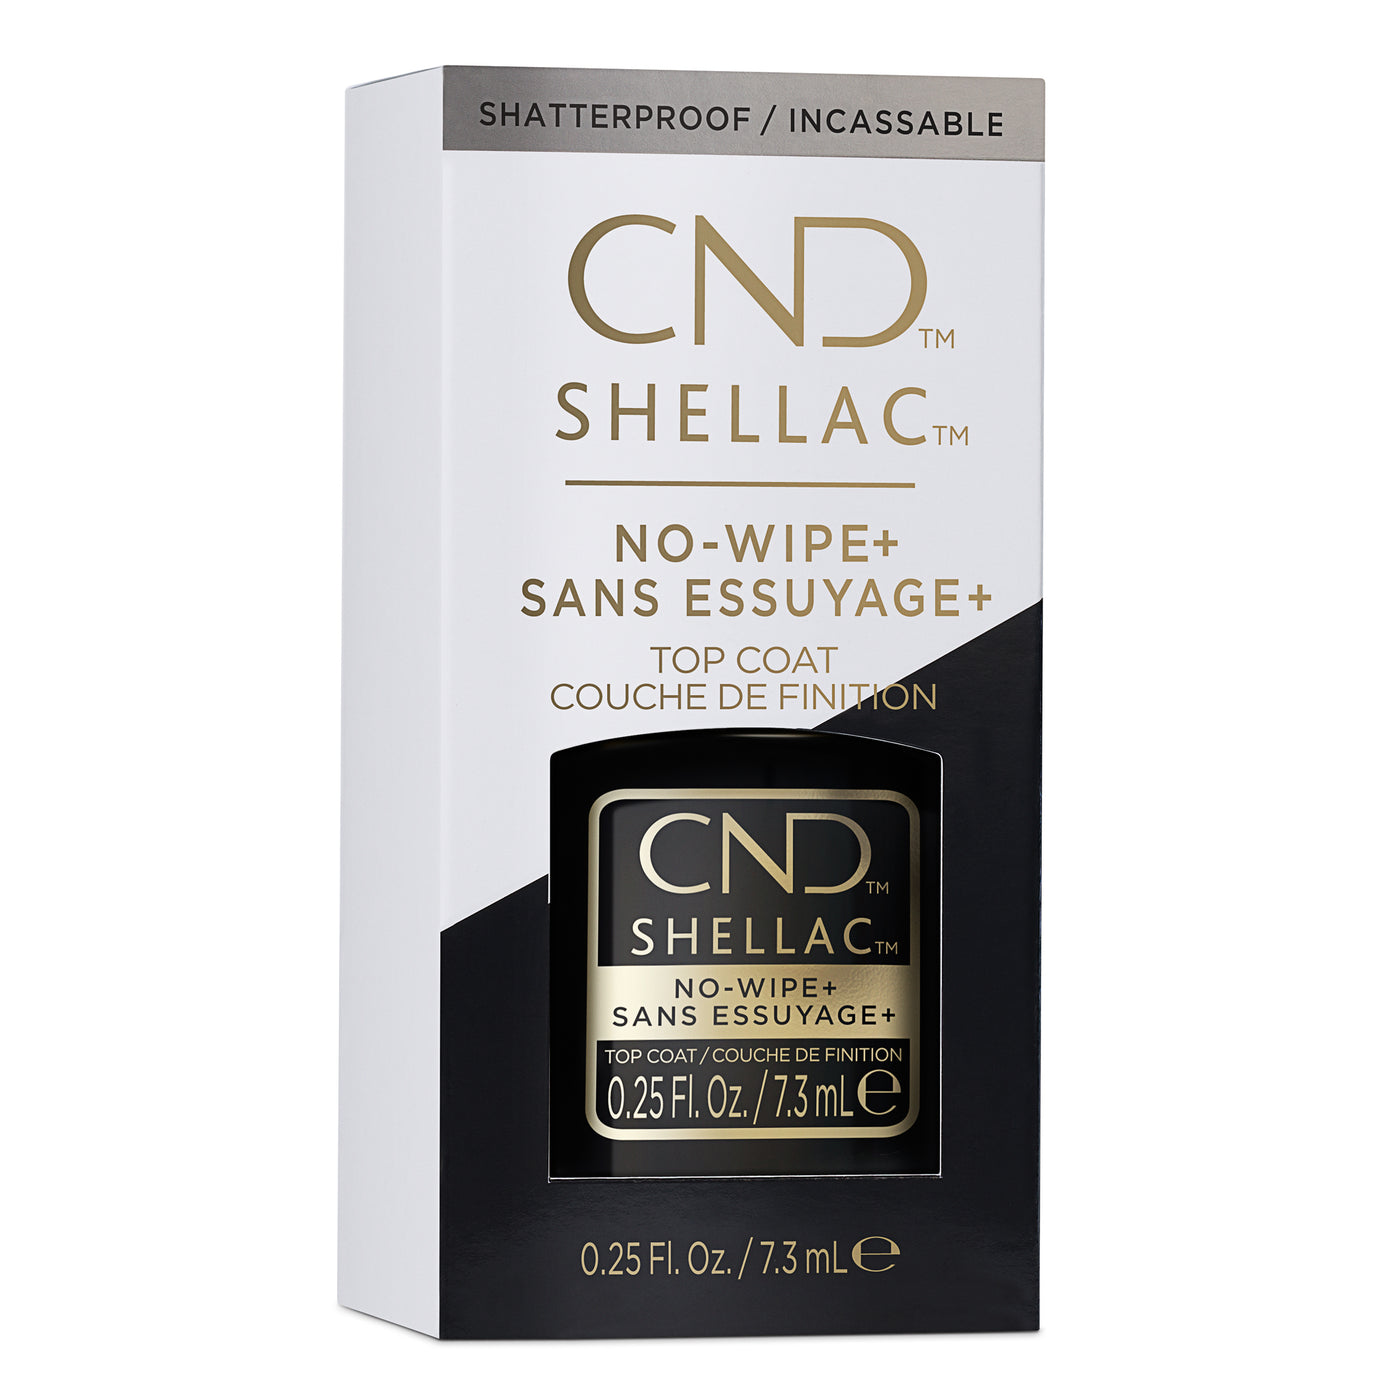 CND Shellac No-Wipe+ Top Coat (7.3ml) packaging